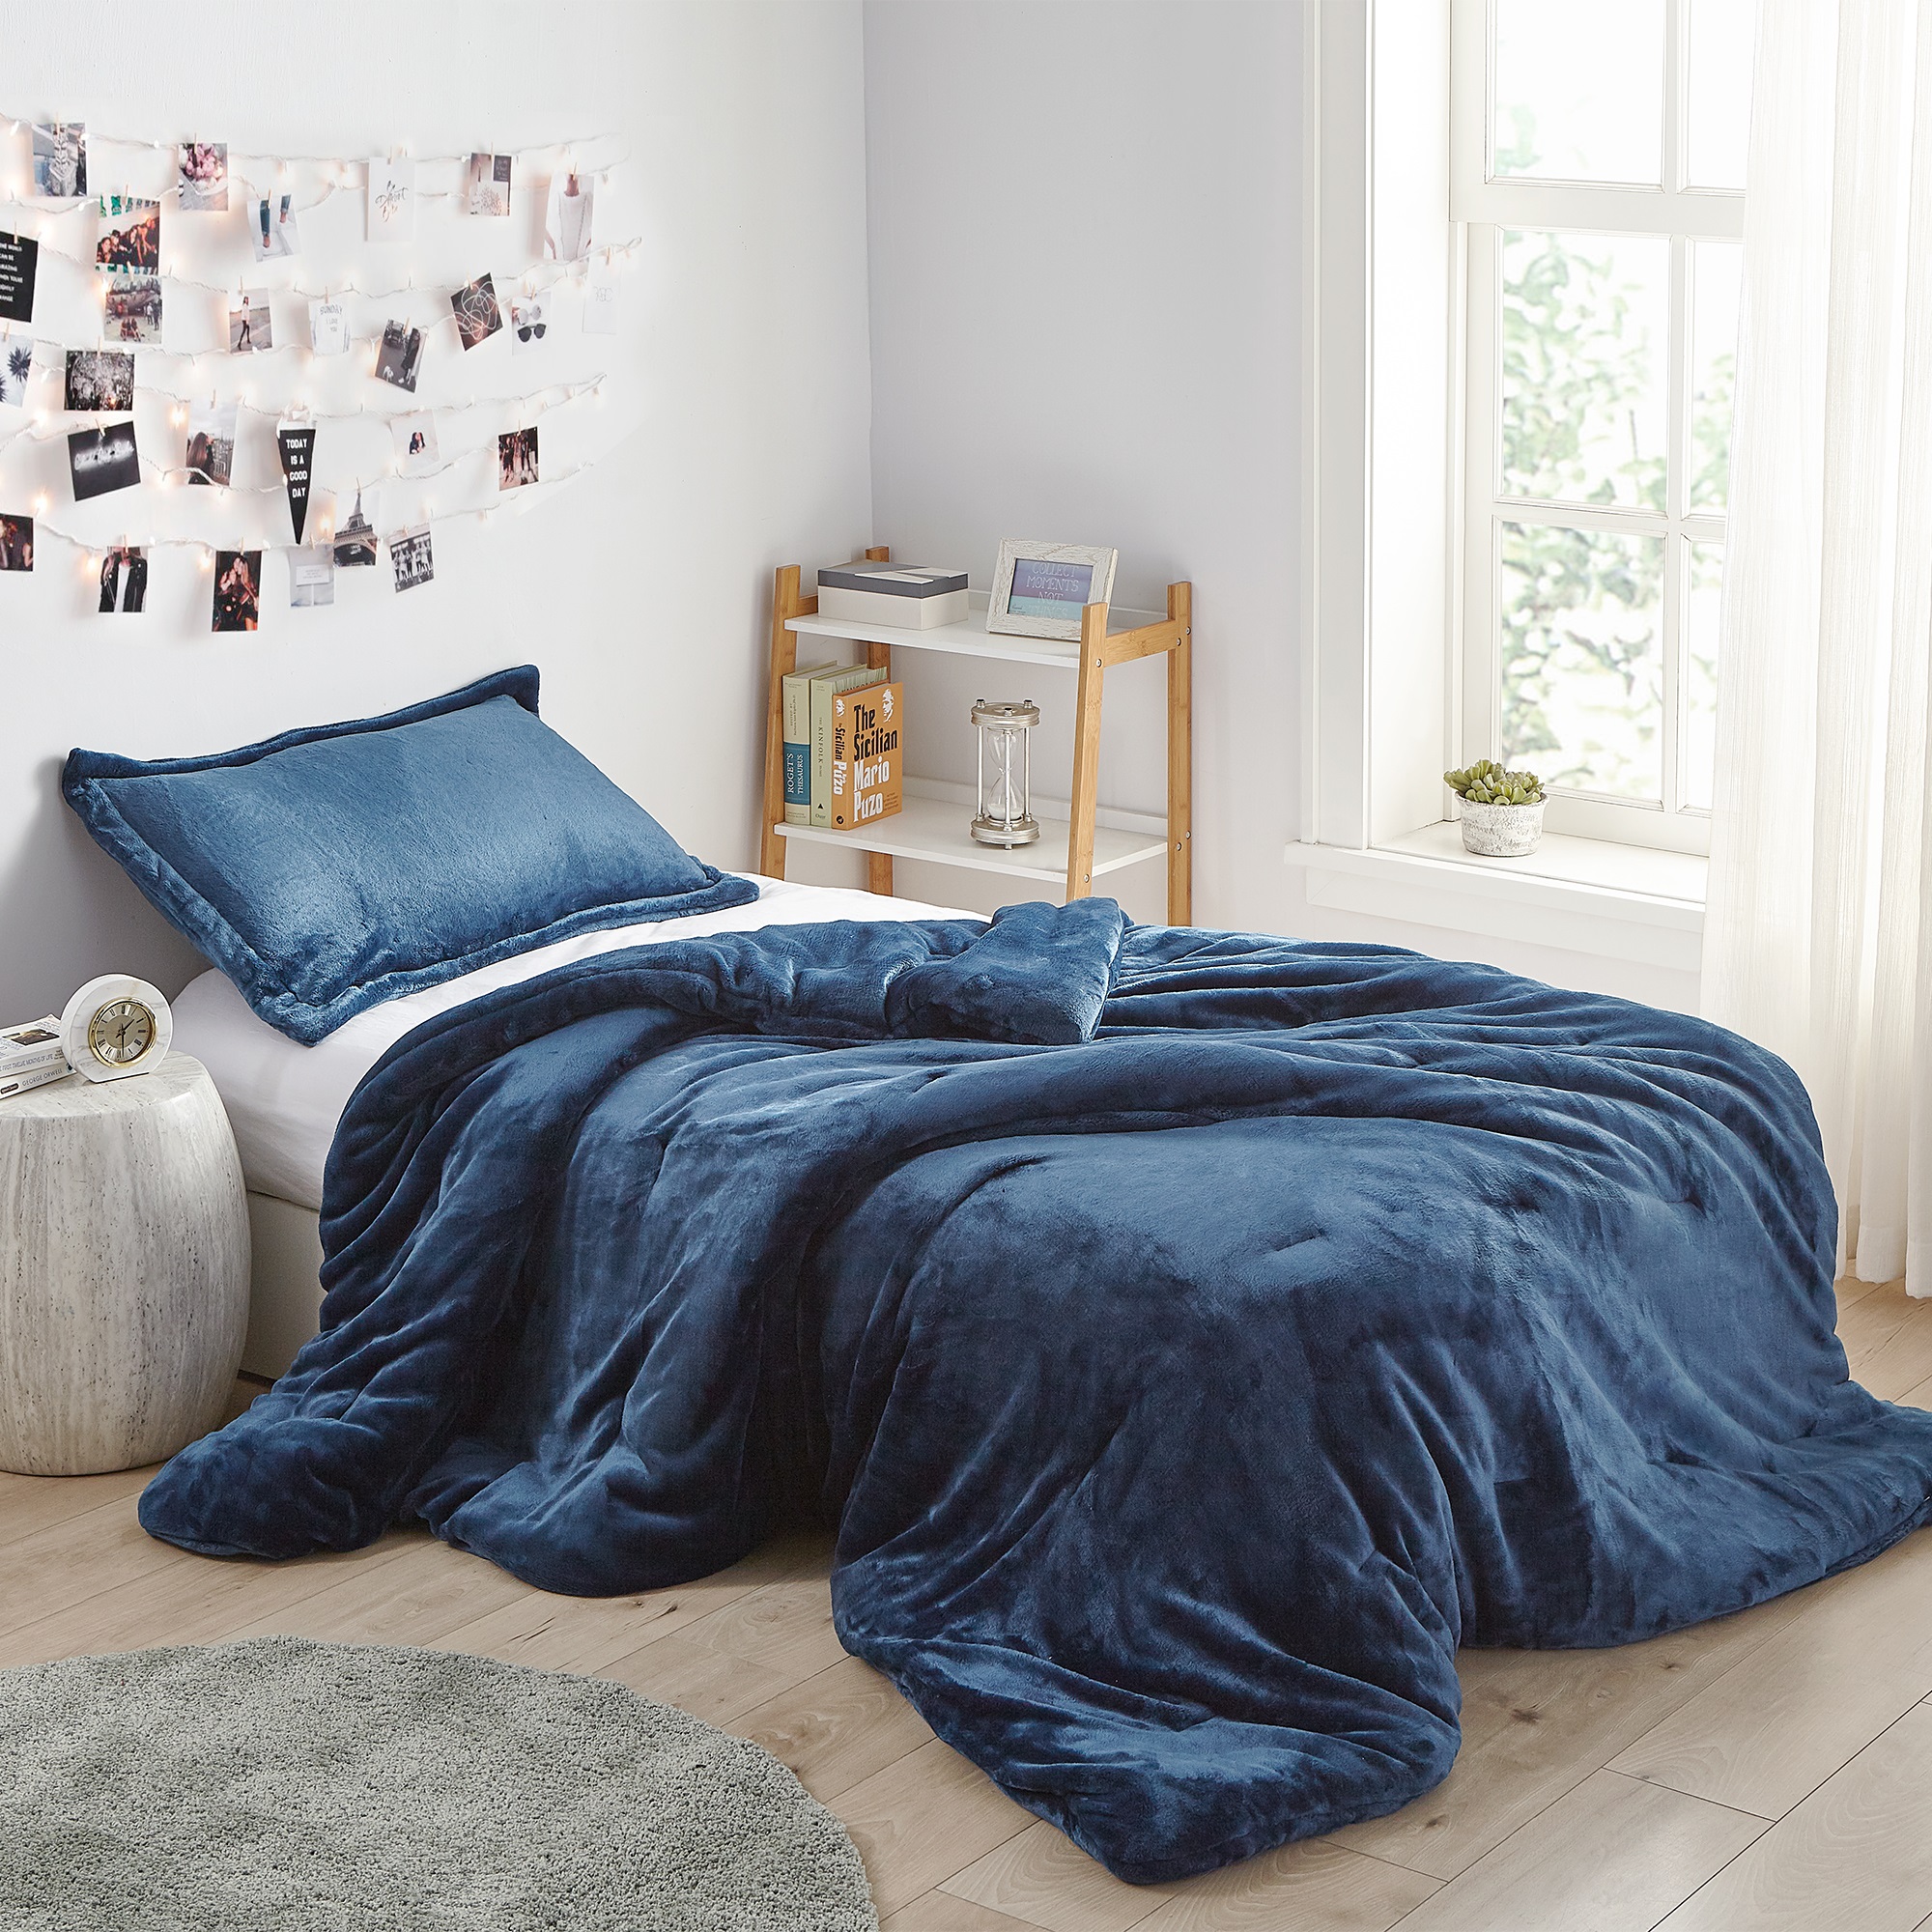 Coma Inducer Oversized Comforter - Me Sooo Comfy - Nightfall Navy